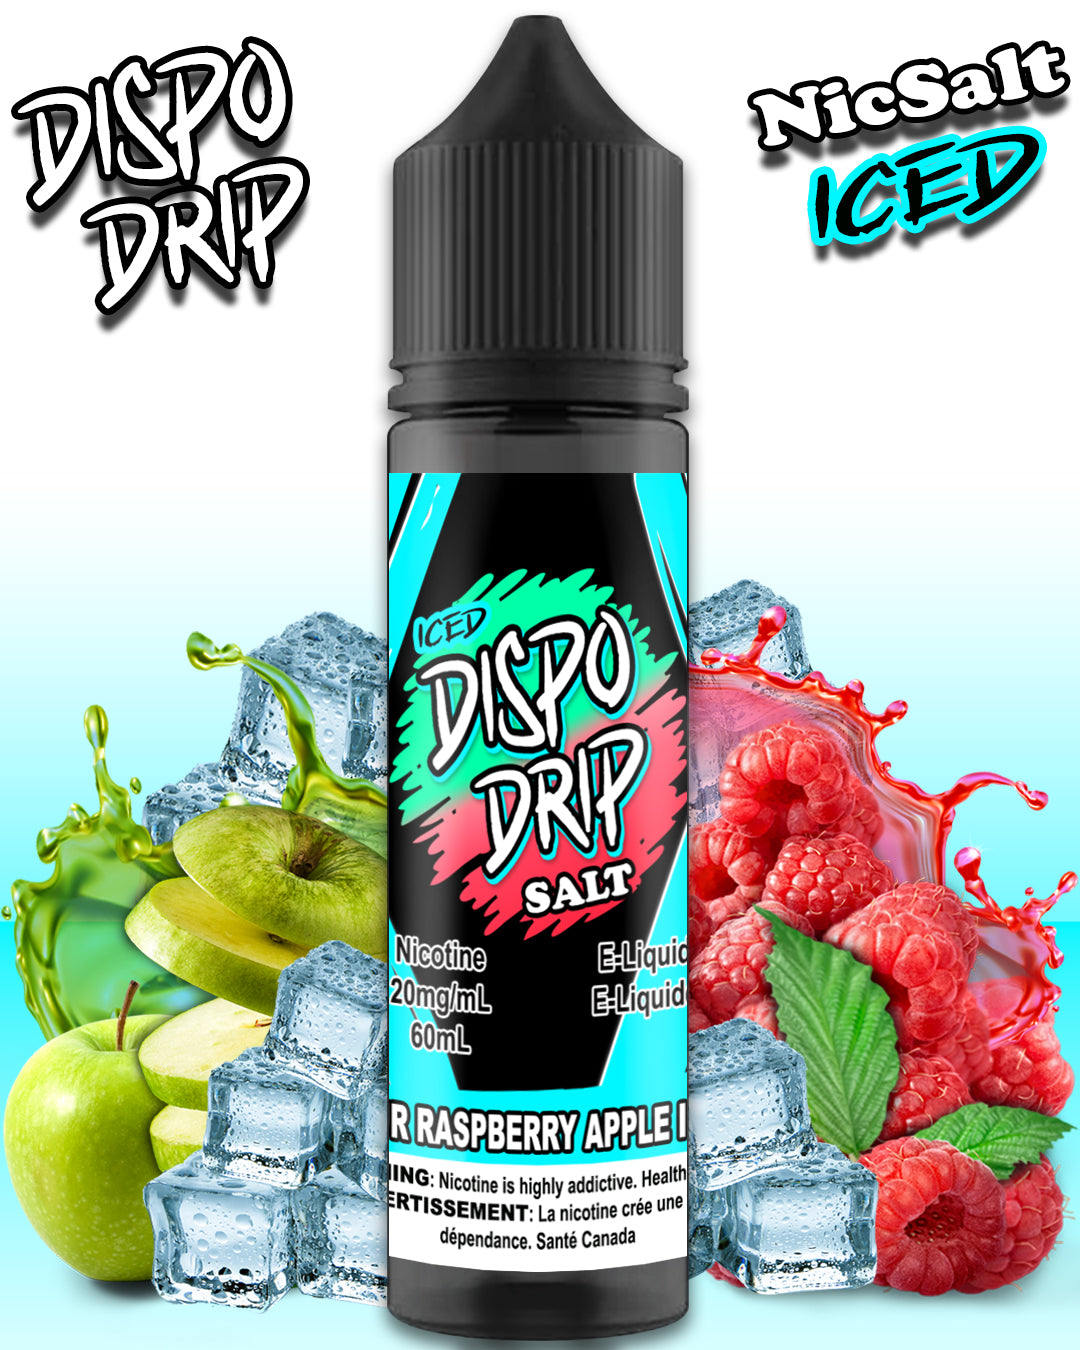 DISPO DRIP ICED - SOUR RASPBERRY APPLE